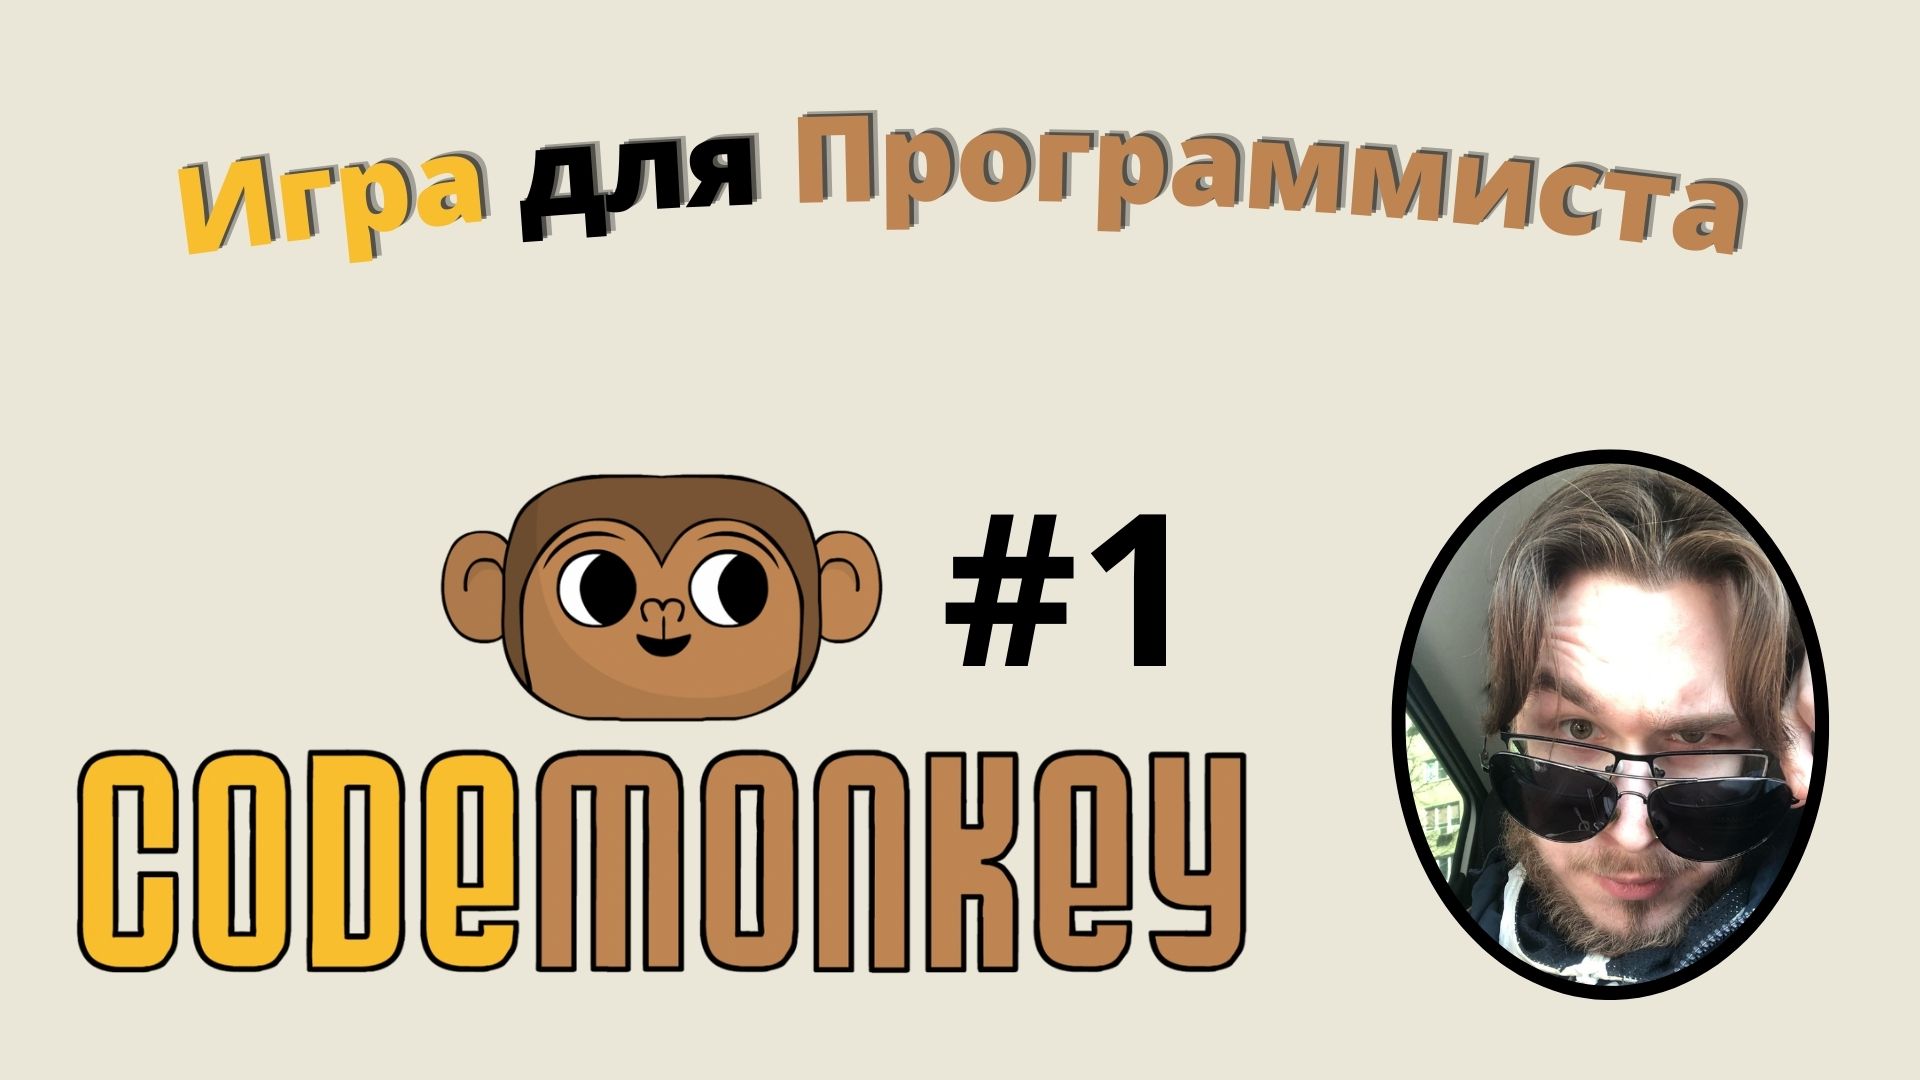 Codemonkey Верни банан программой